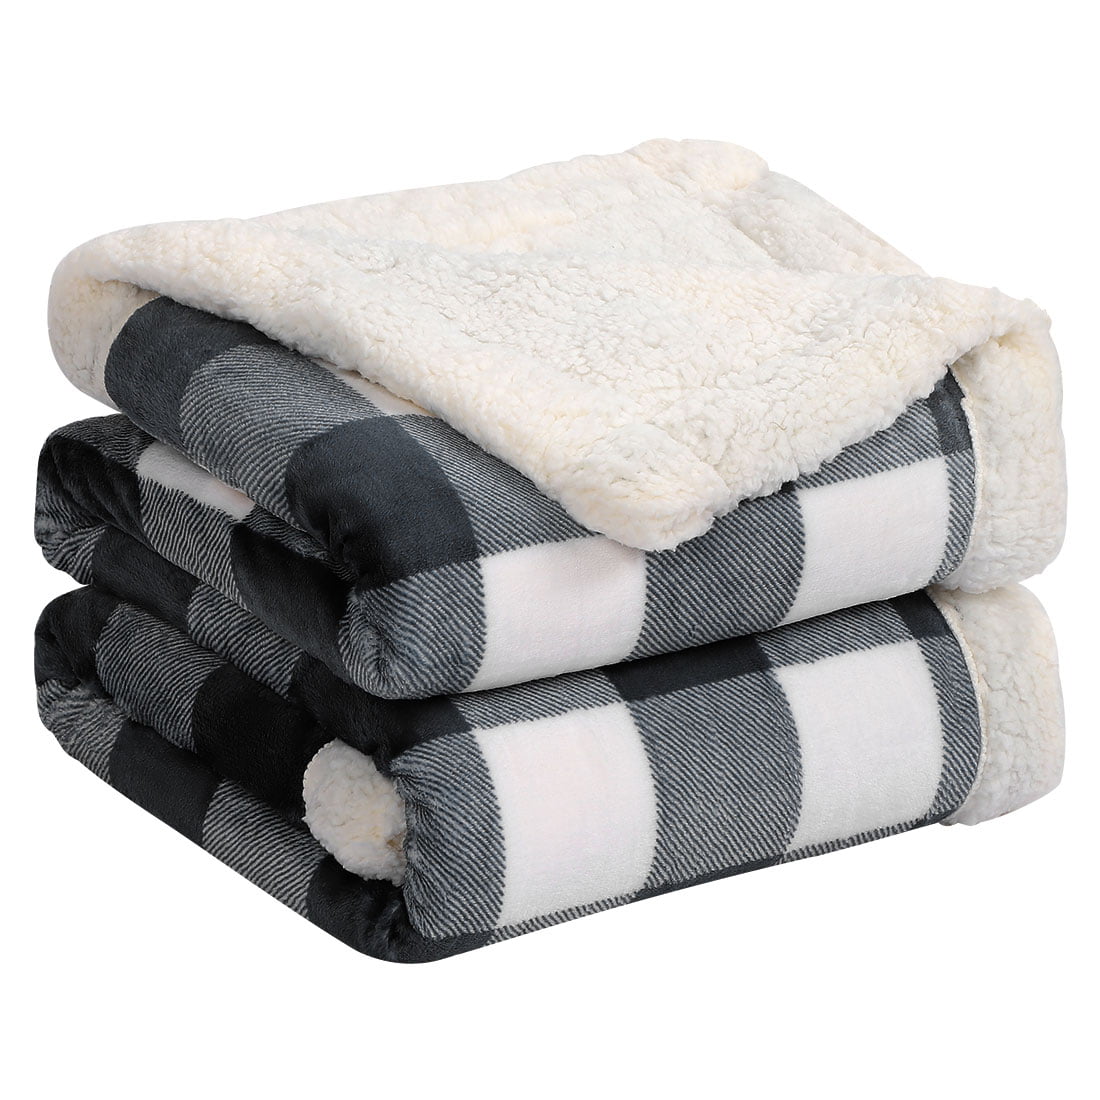 Fuzzy Blanket Throw 40x50 Red Fish Wood Grain Blanket Plush Fleece Throw Blanket Lightweight Blanket Soft Flannel Blankets Prime-Home Blanket Fleece Blanket Throw